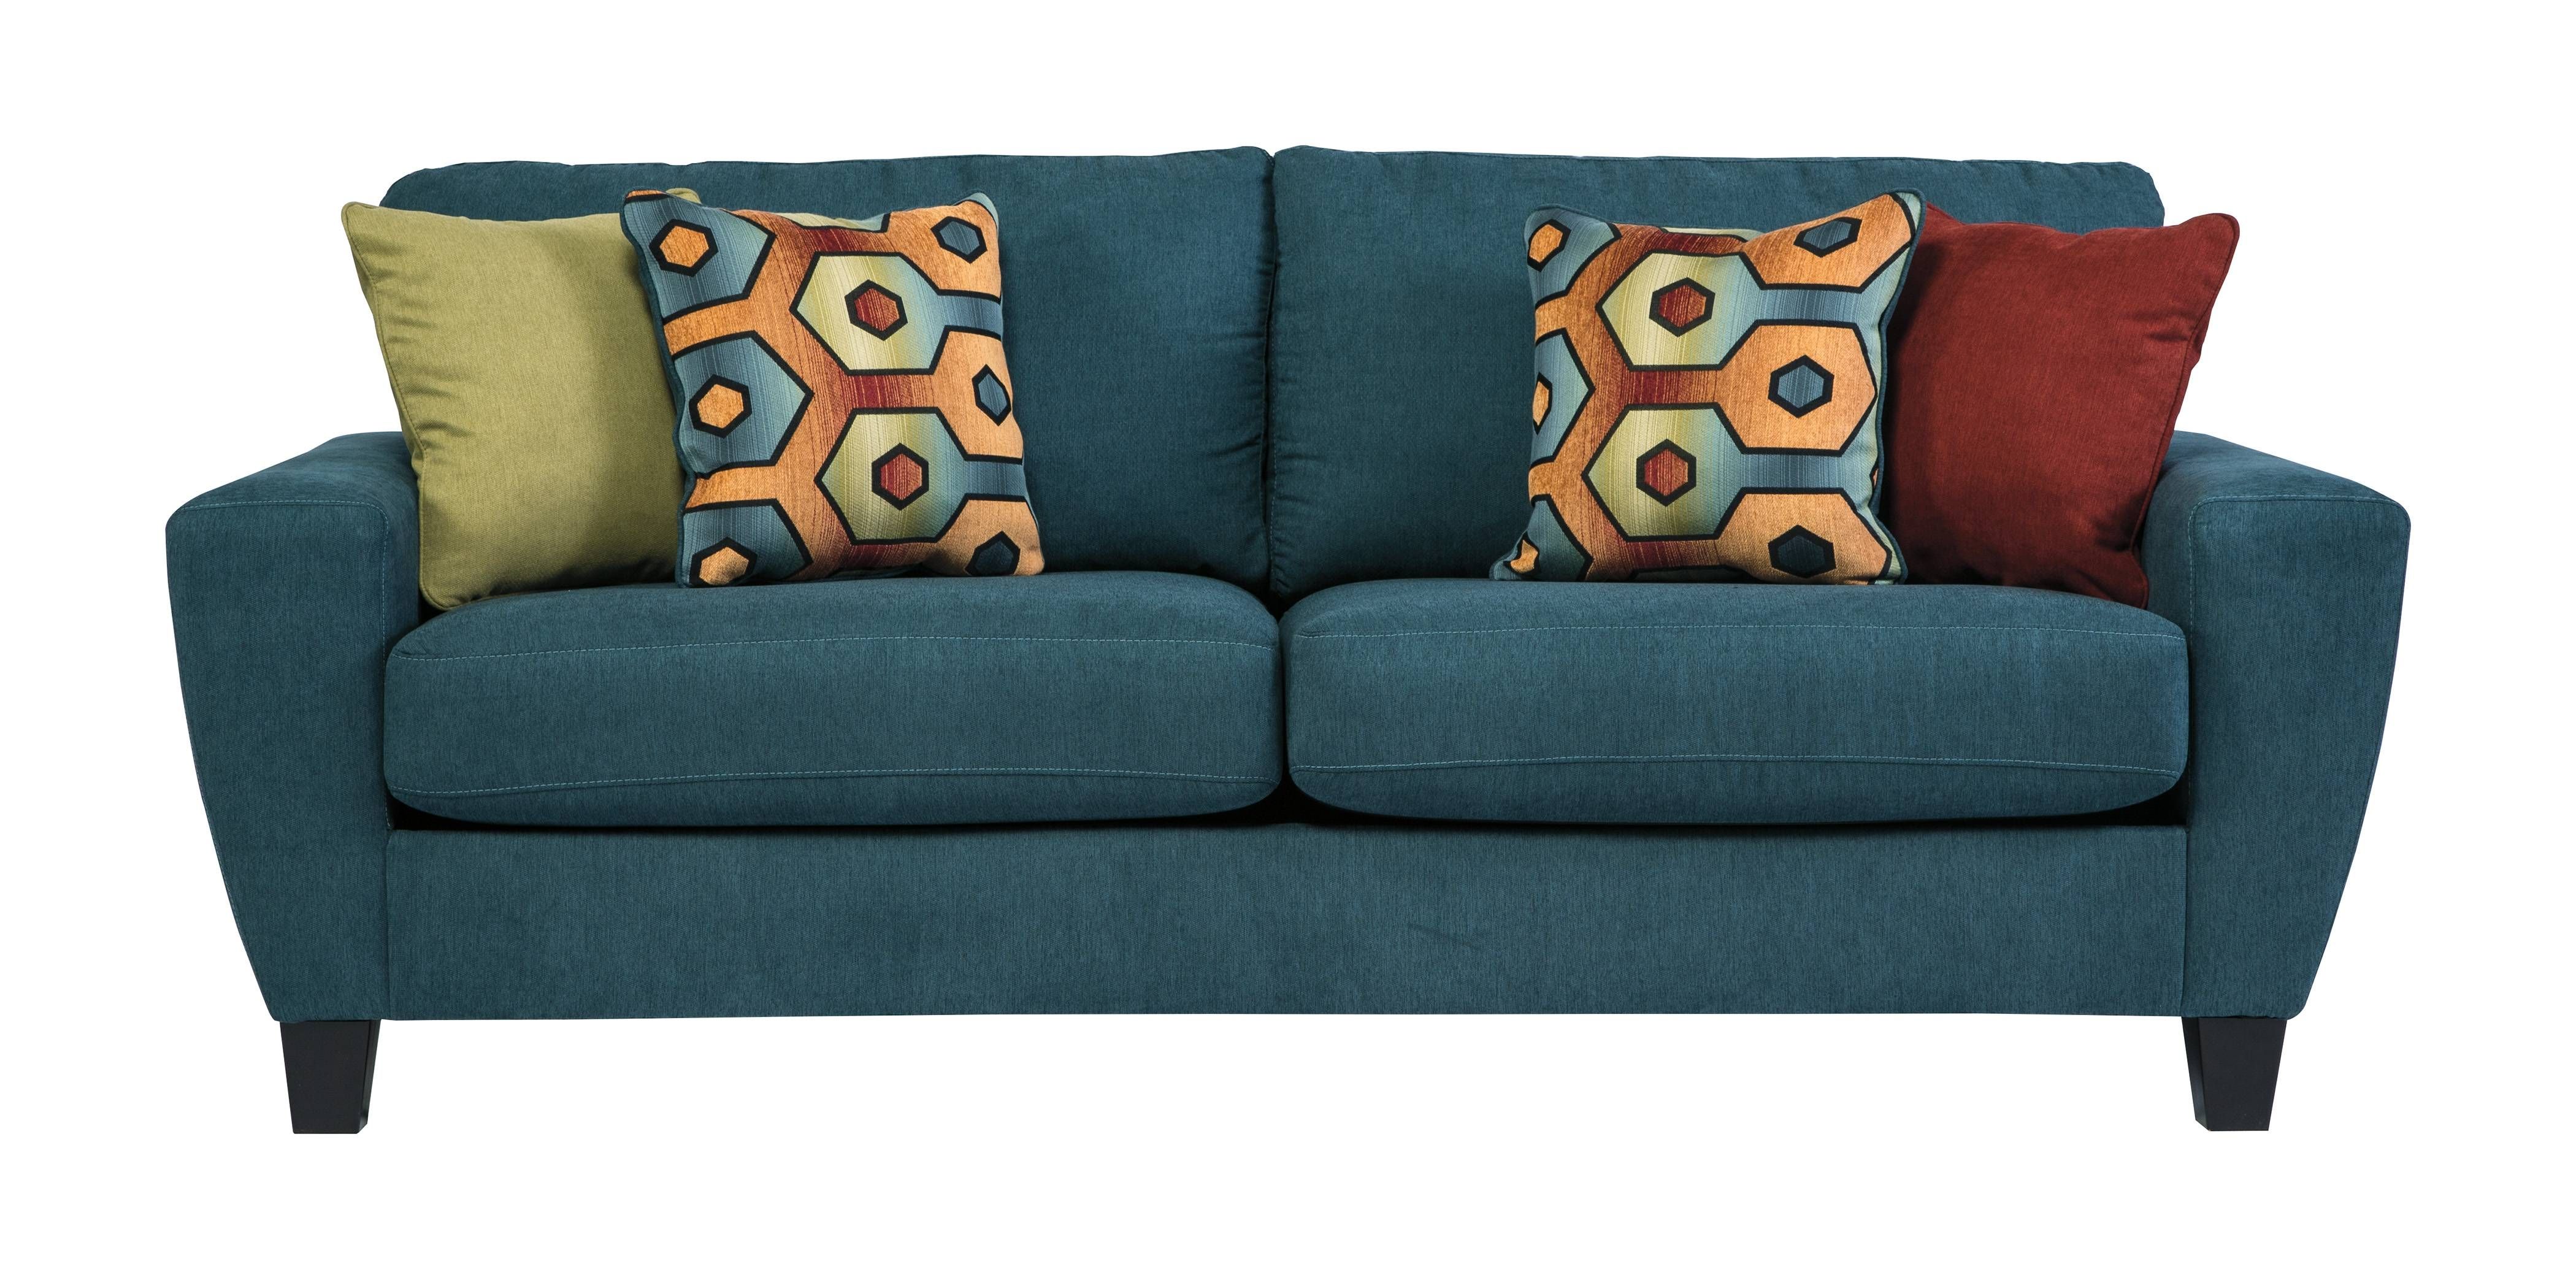 Sadie Sofa Chair Ottoman Living Room Set 3pc Contemporary Modern Regarding Sofa Chair With Ottoman (View 21 of 30)